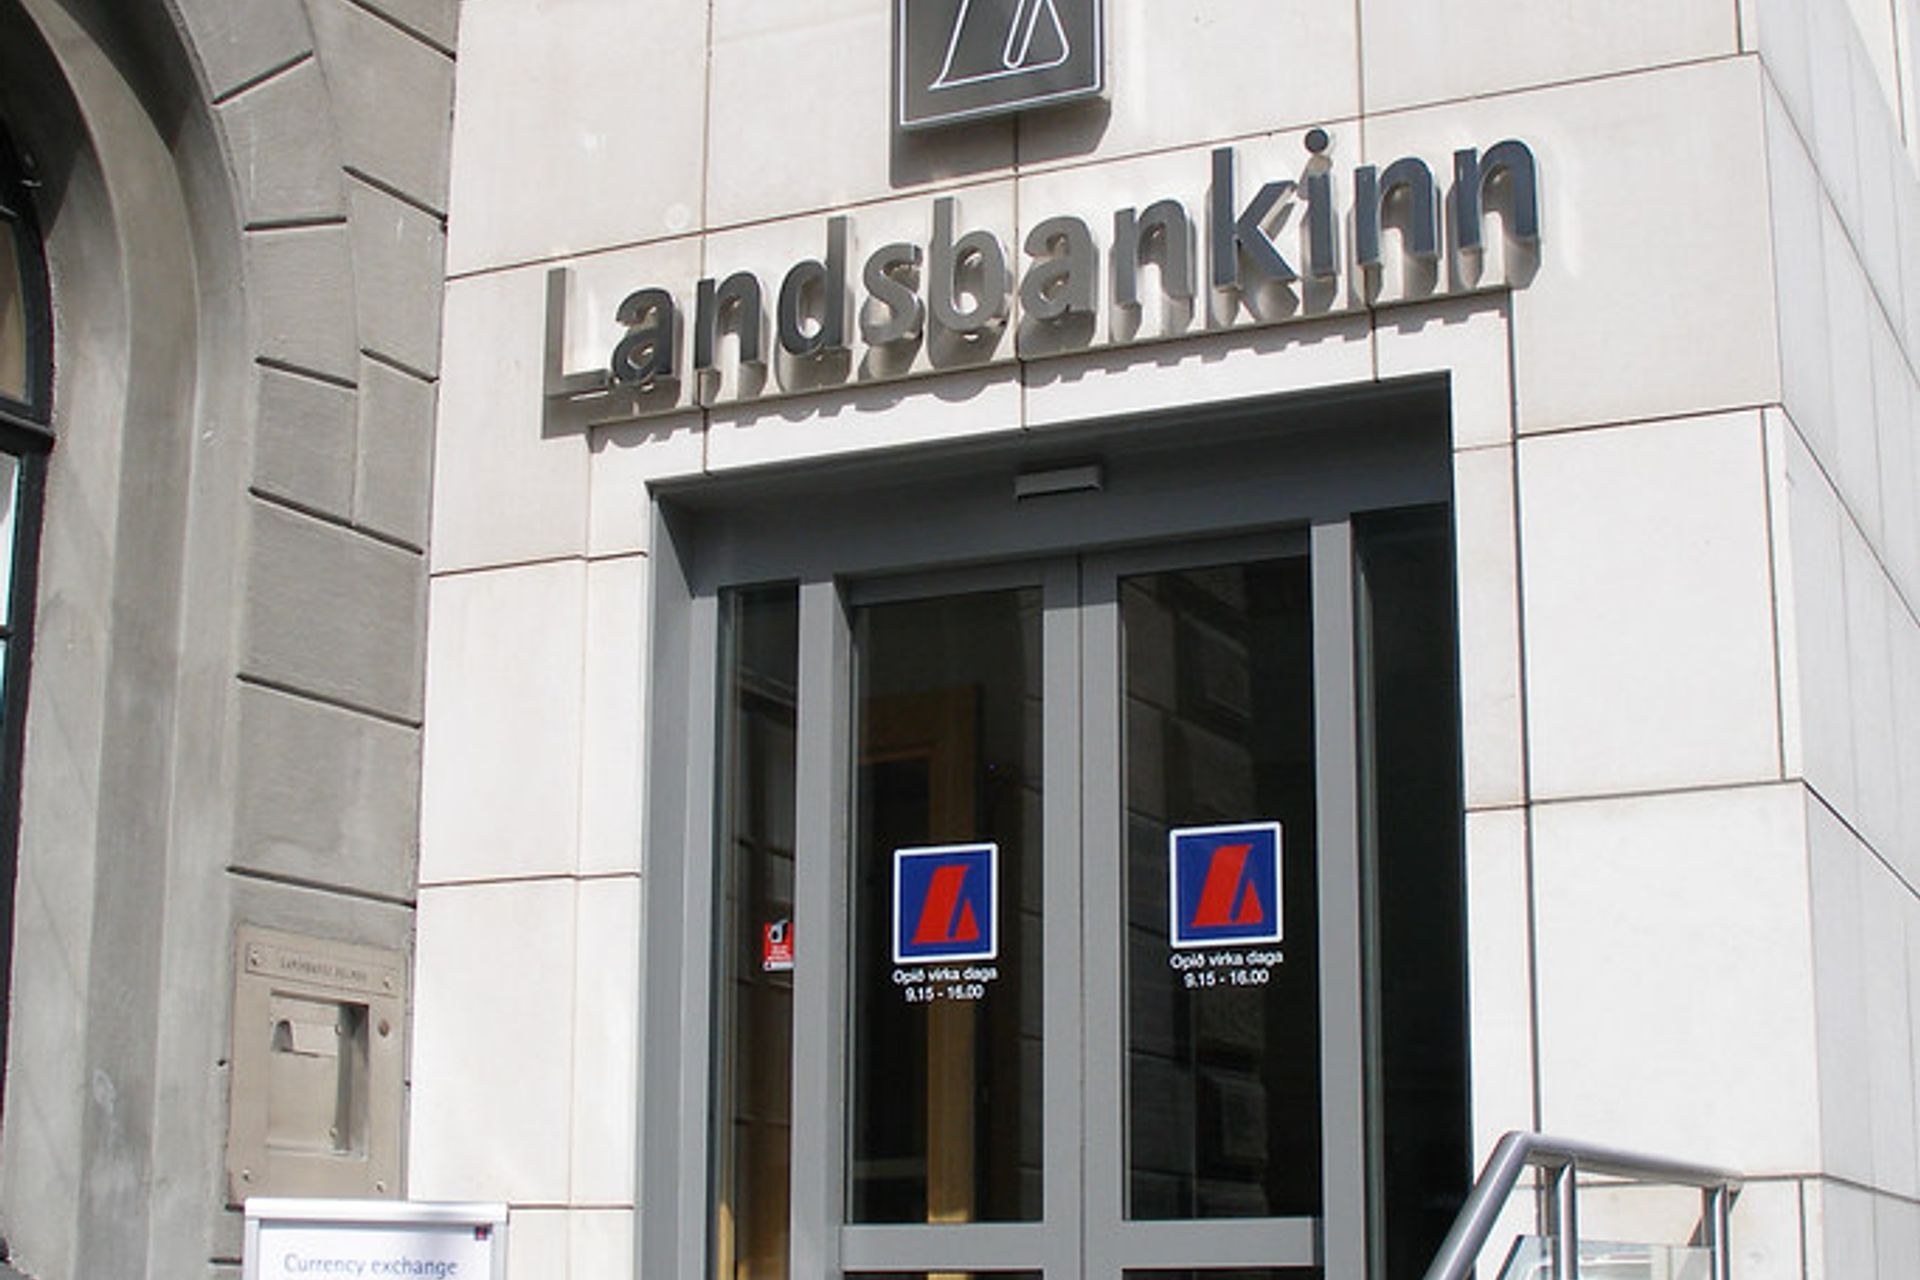 Entrance of Landsbankin in Iceland 